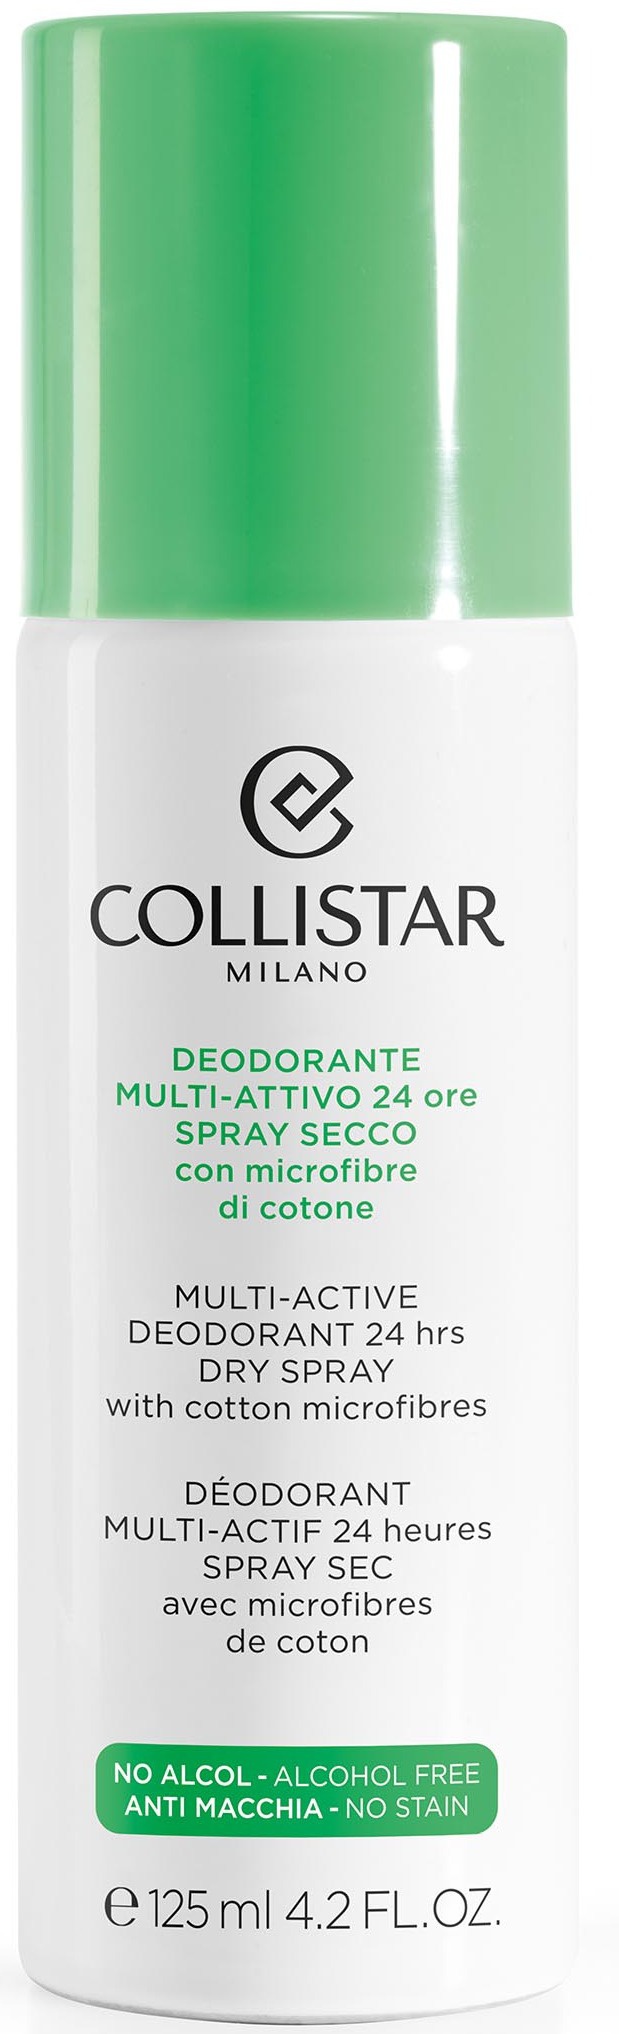 Collistar Special Perfect Body Multi-active Deodorant 24 Hours Dry Spray